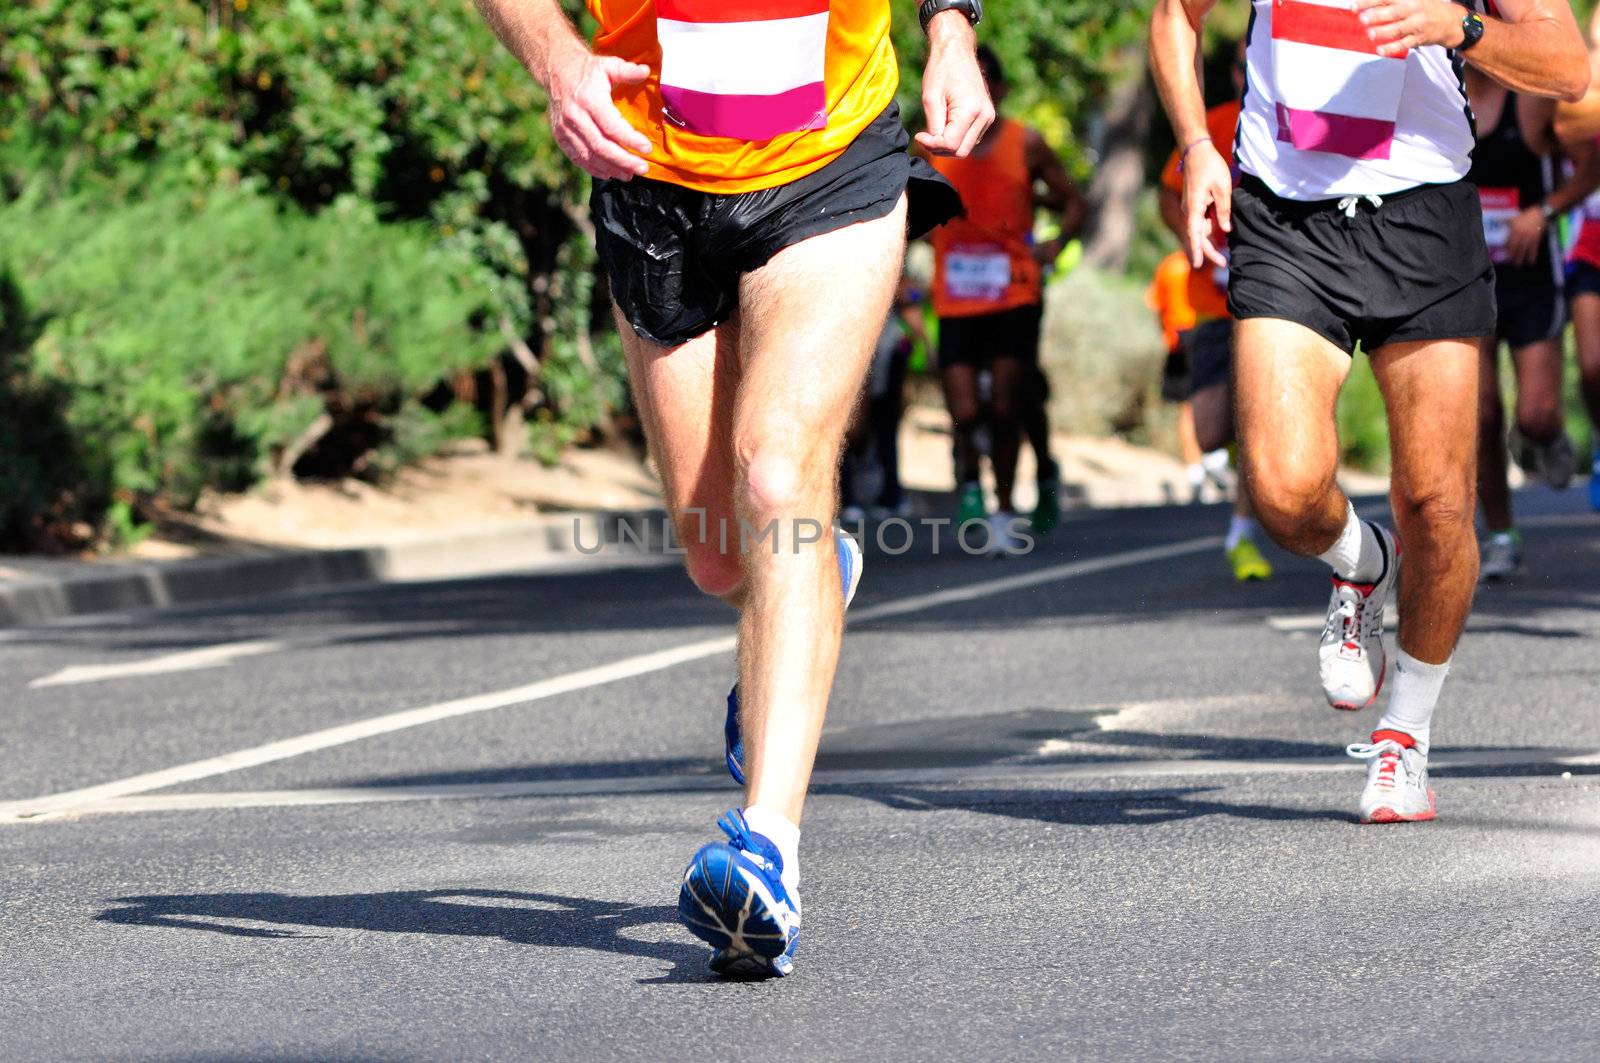 Group of marathon racers running